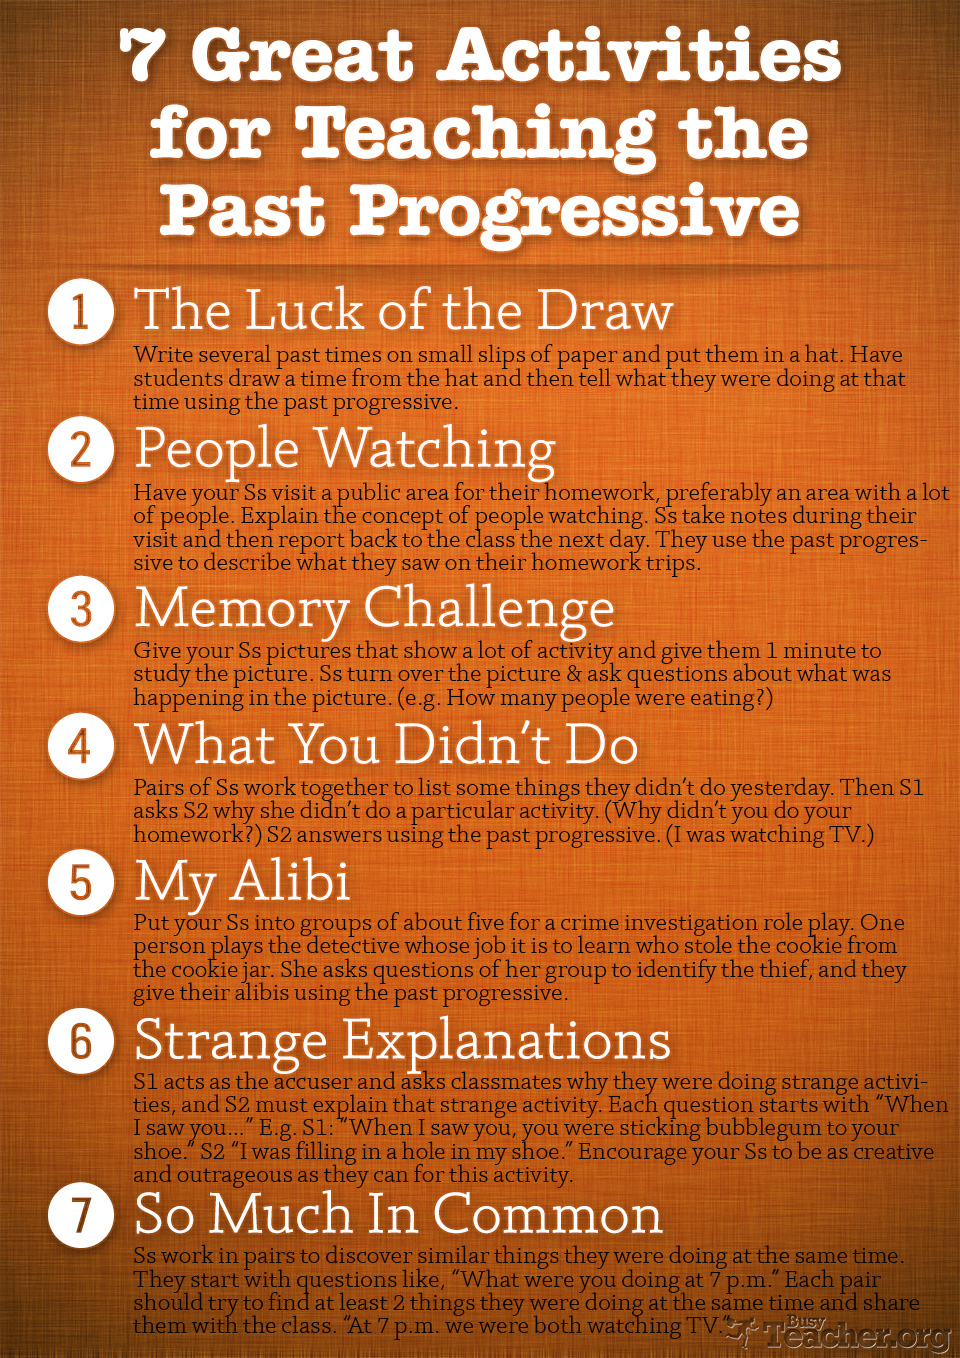 POSTER: 7 Great Activities to Teach the Past Progressive